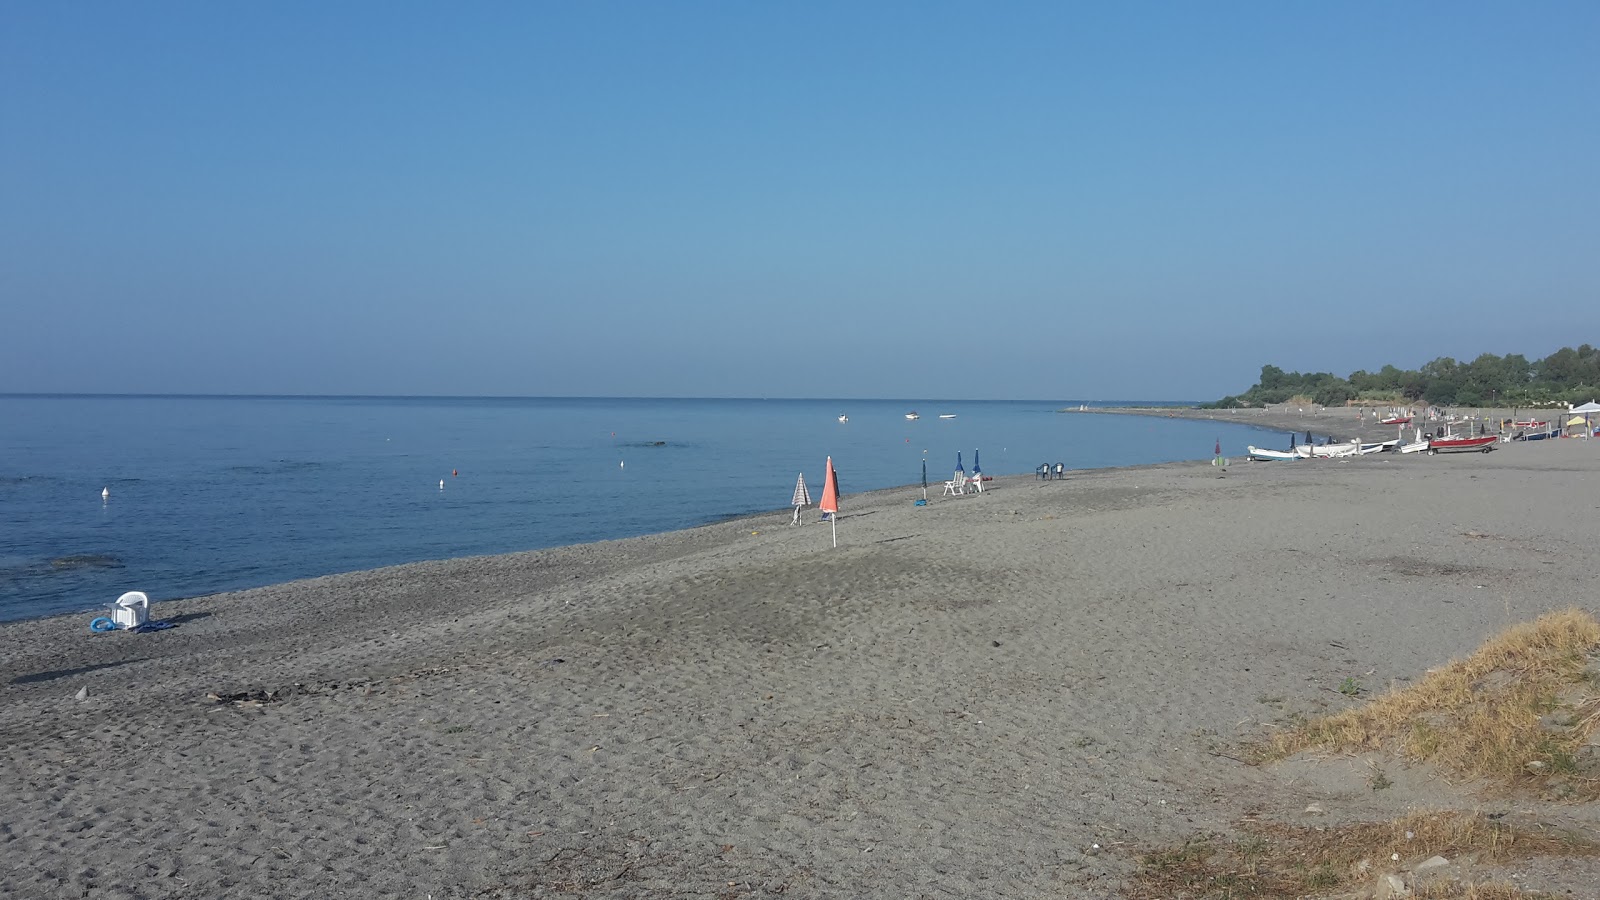 Fotografie cu Ultima Spiaggia II cu nivelul de curățenie in medie